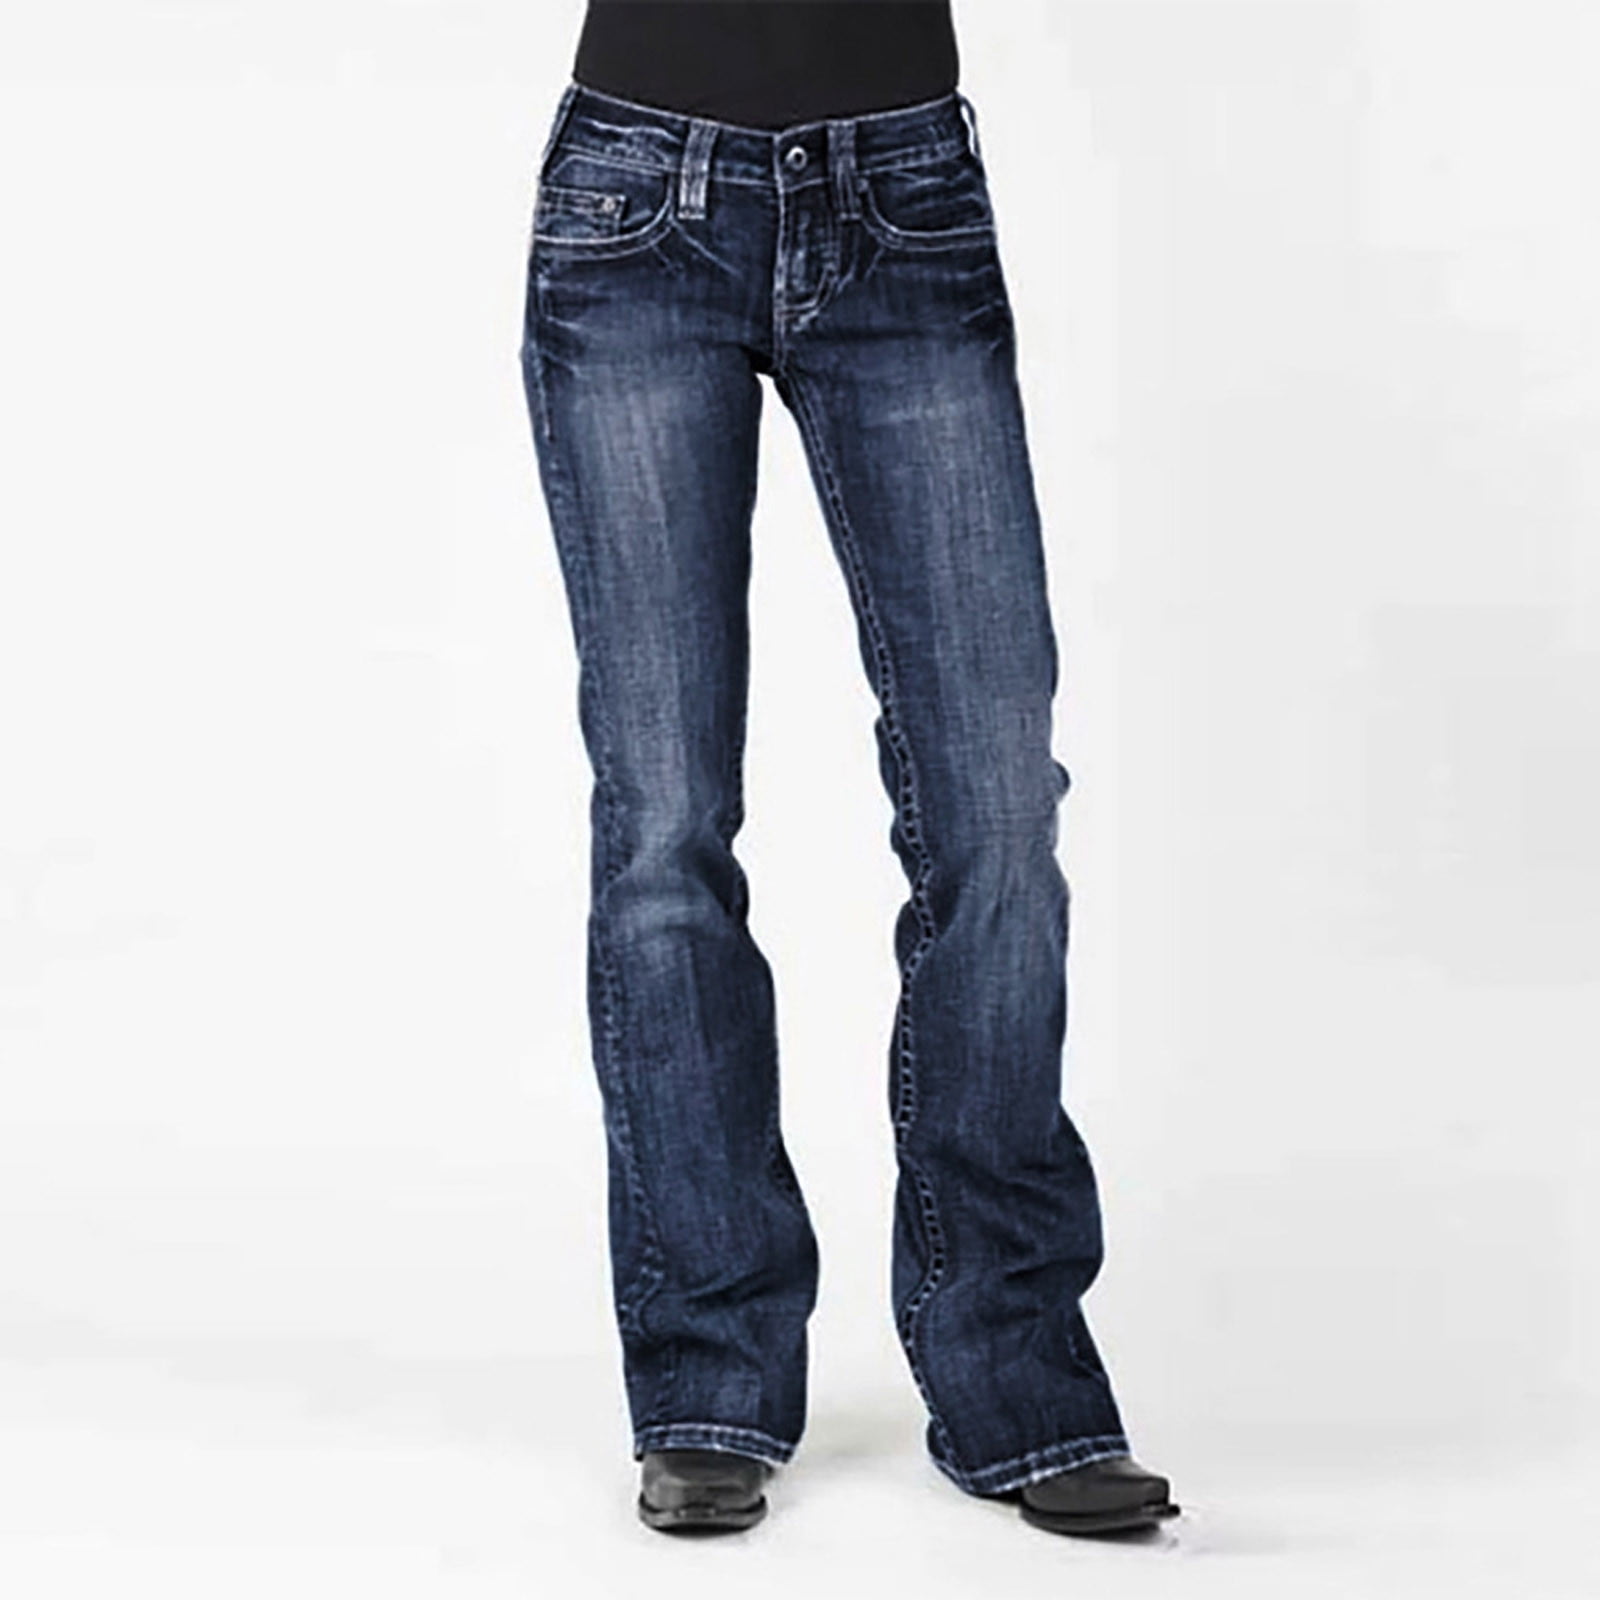 YODETEY Plus Size Women Pants Clearance Women Mid Waisted Denim Jeans ...